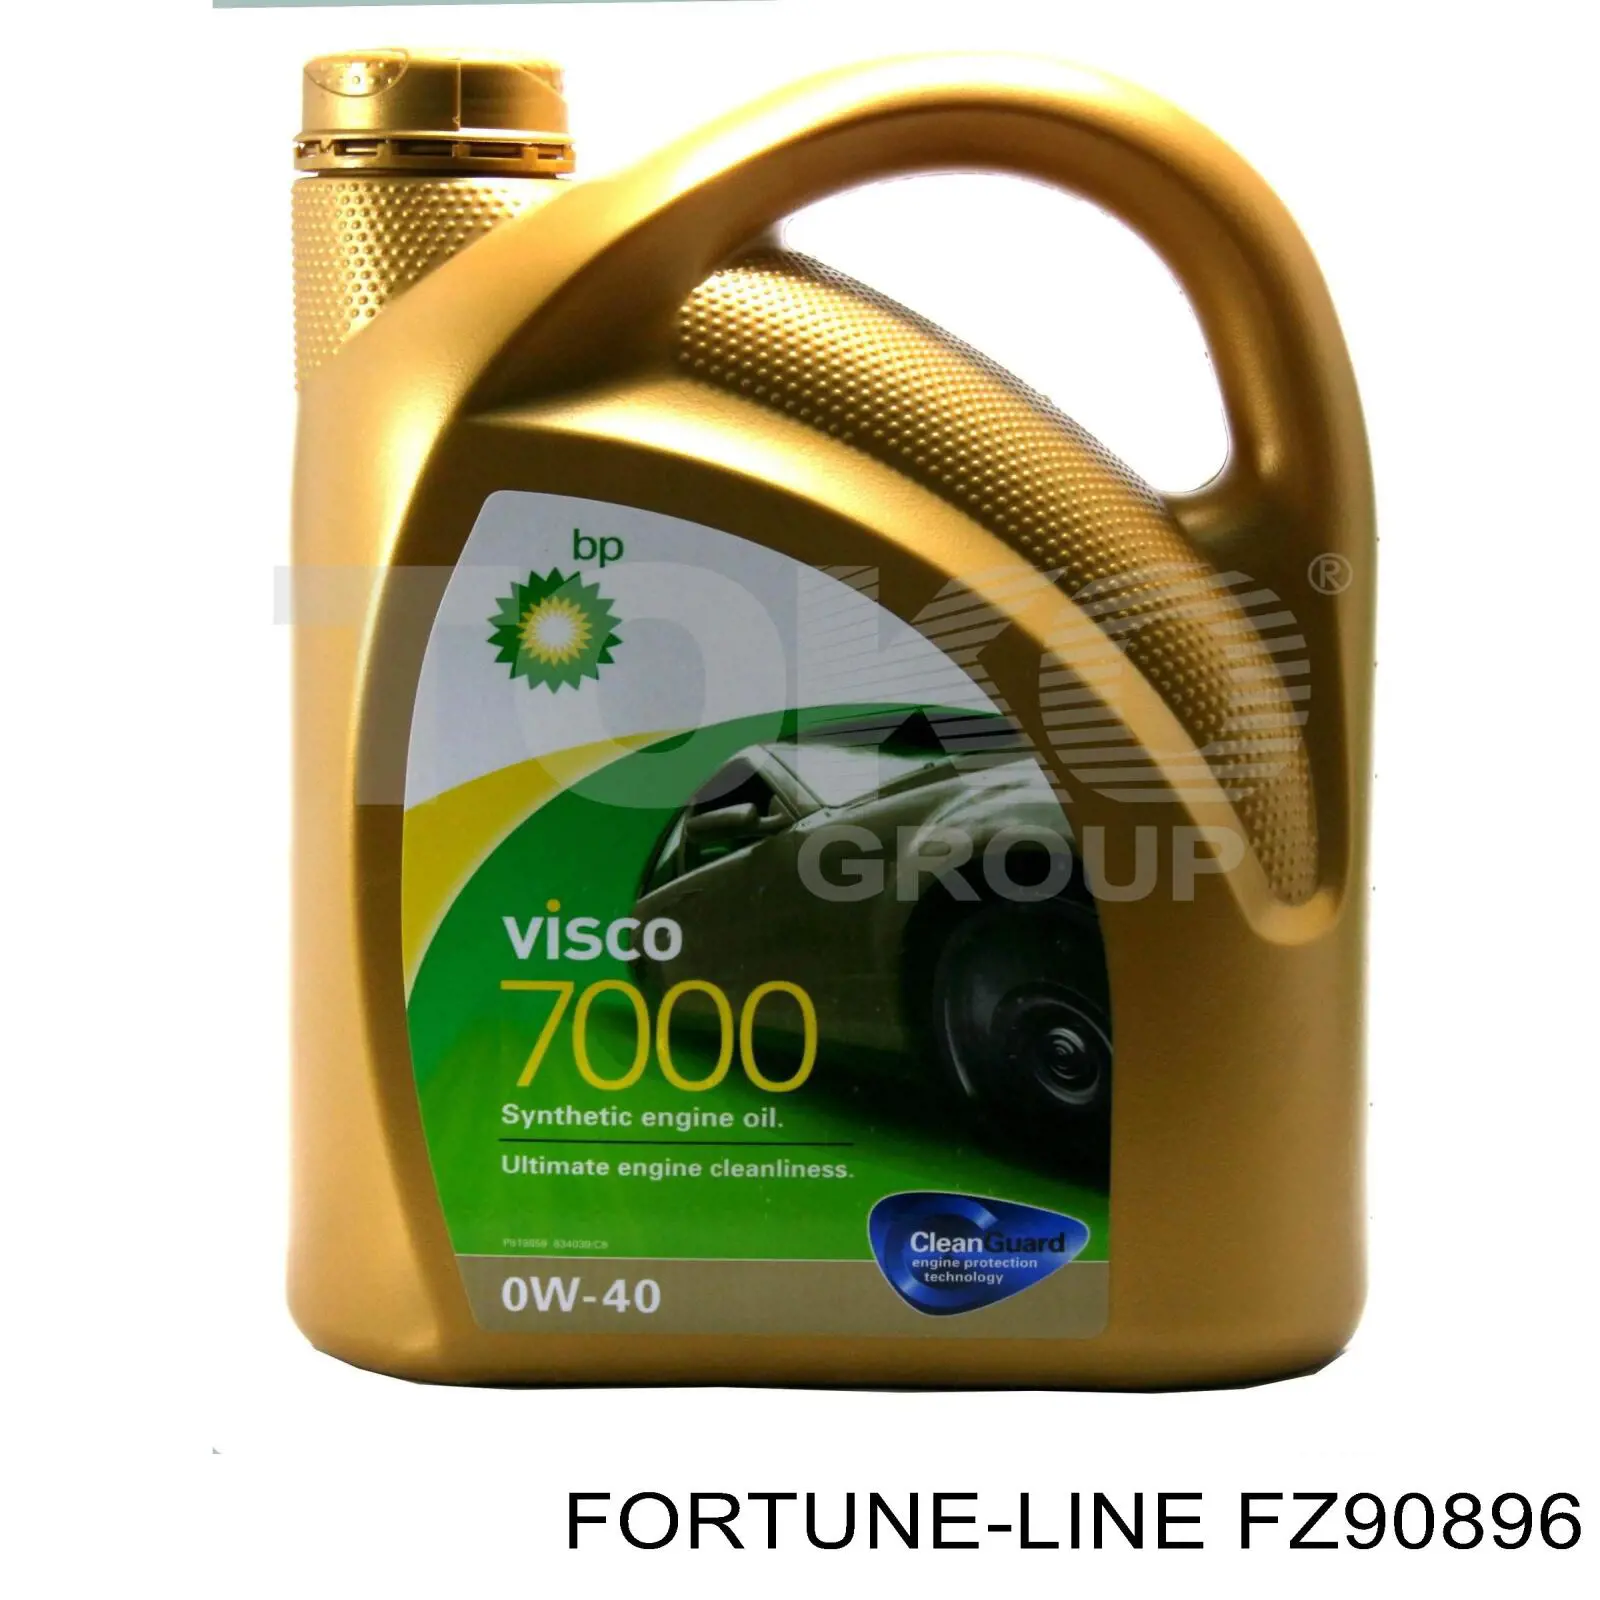 FZ90896 Fortune Line casquillo de barra estabilizadora delantera